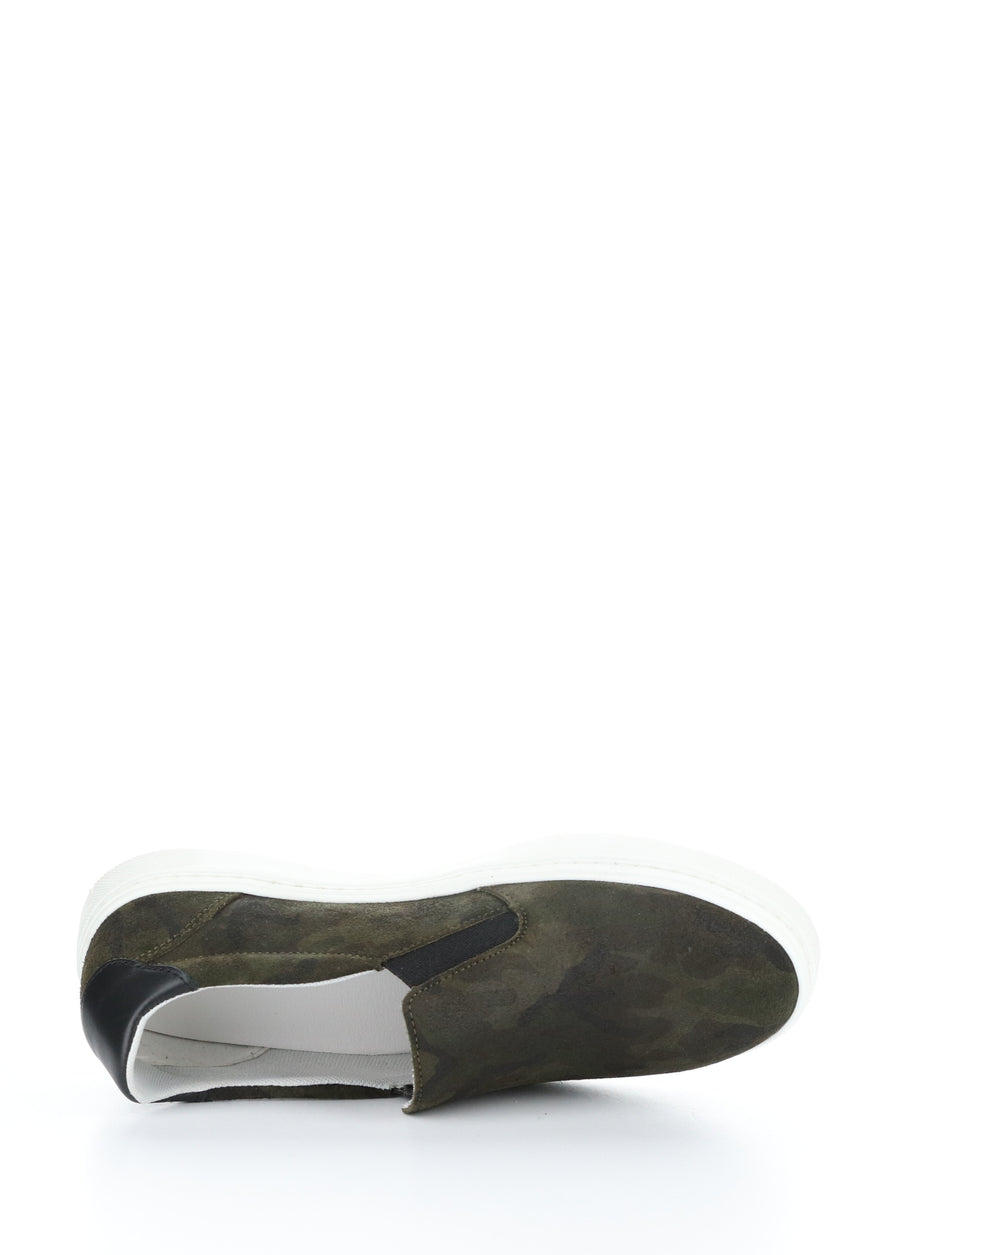 CHUSKA OLIVE/BLACK Round Toe Shoes